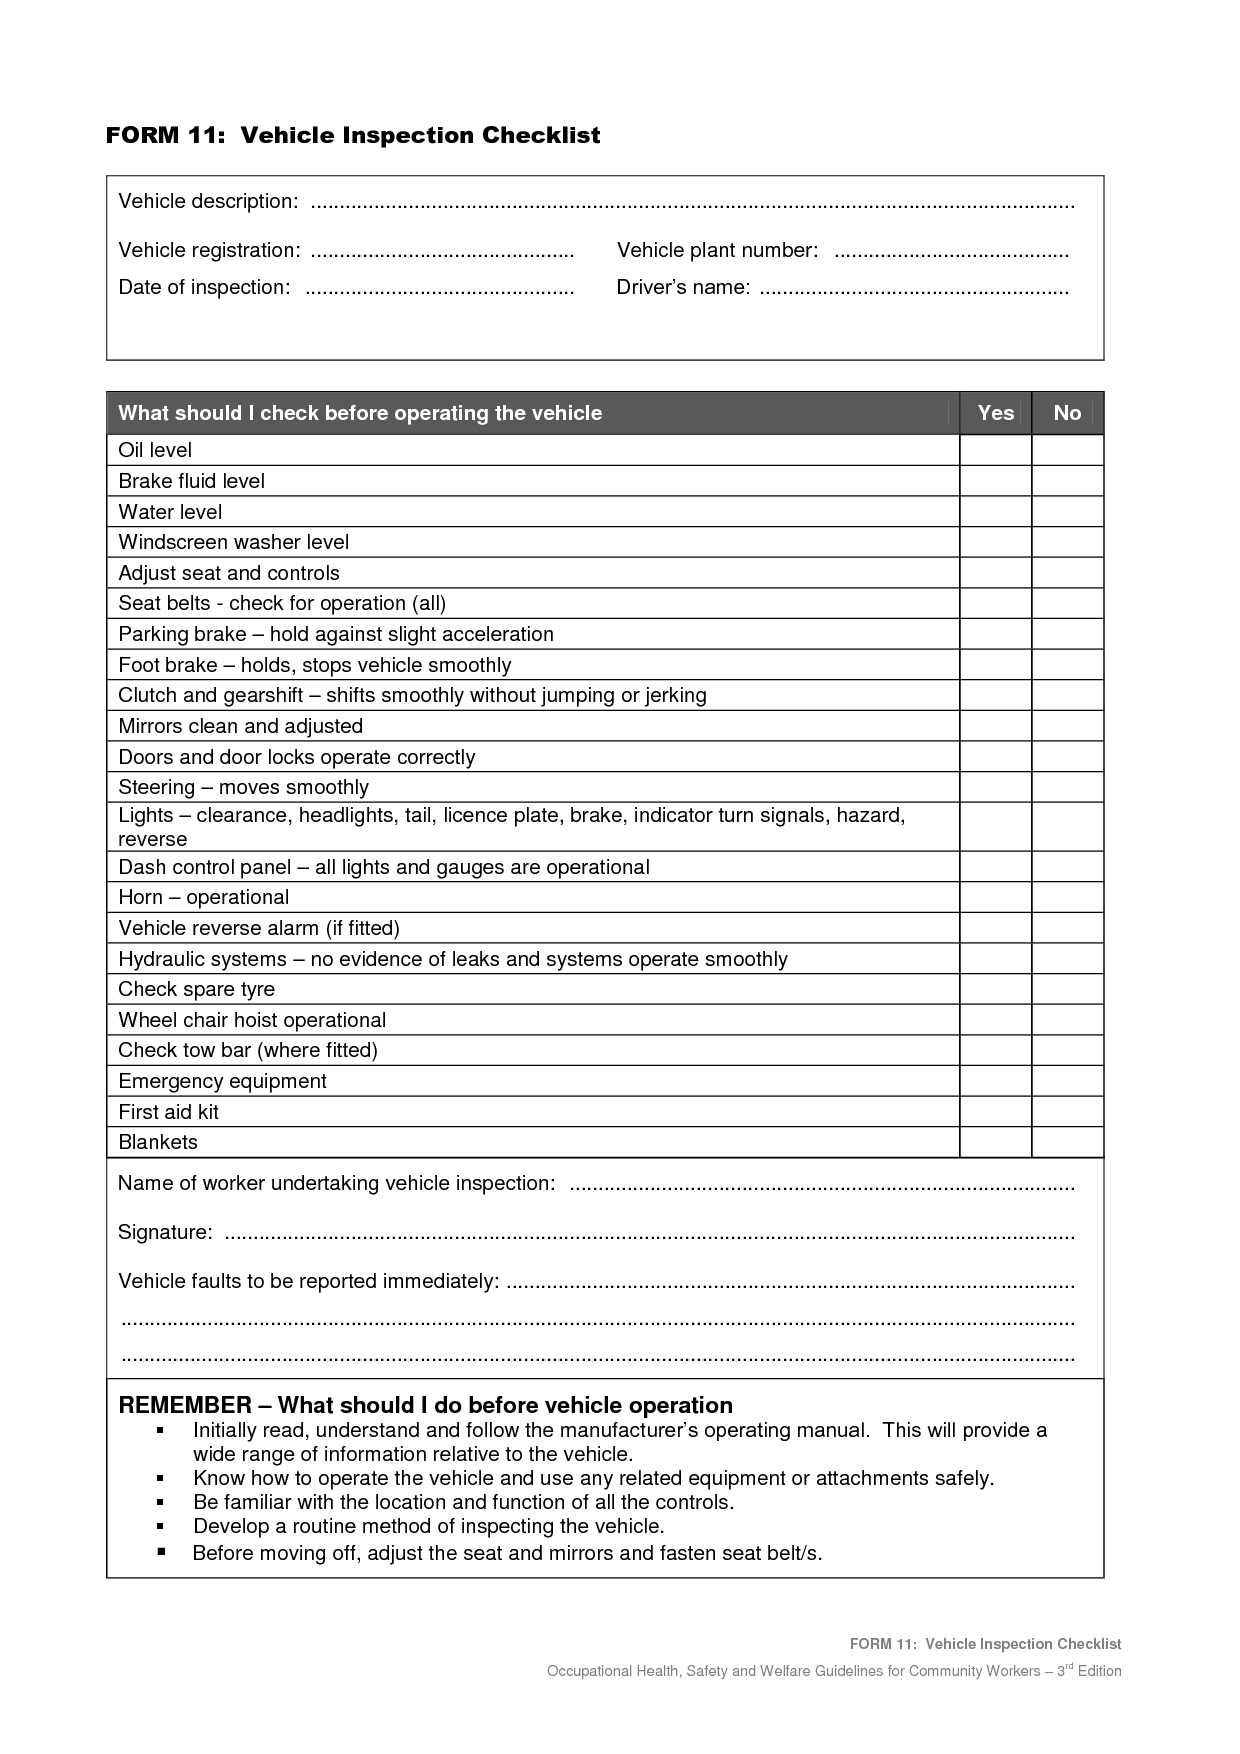 Vehicle safety checklist template With Regard To Vehicle Safety Inspection Checklist Template For Vehicle Safety Inspection Checklist Template